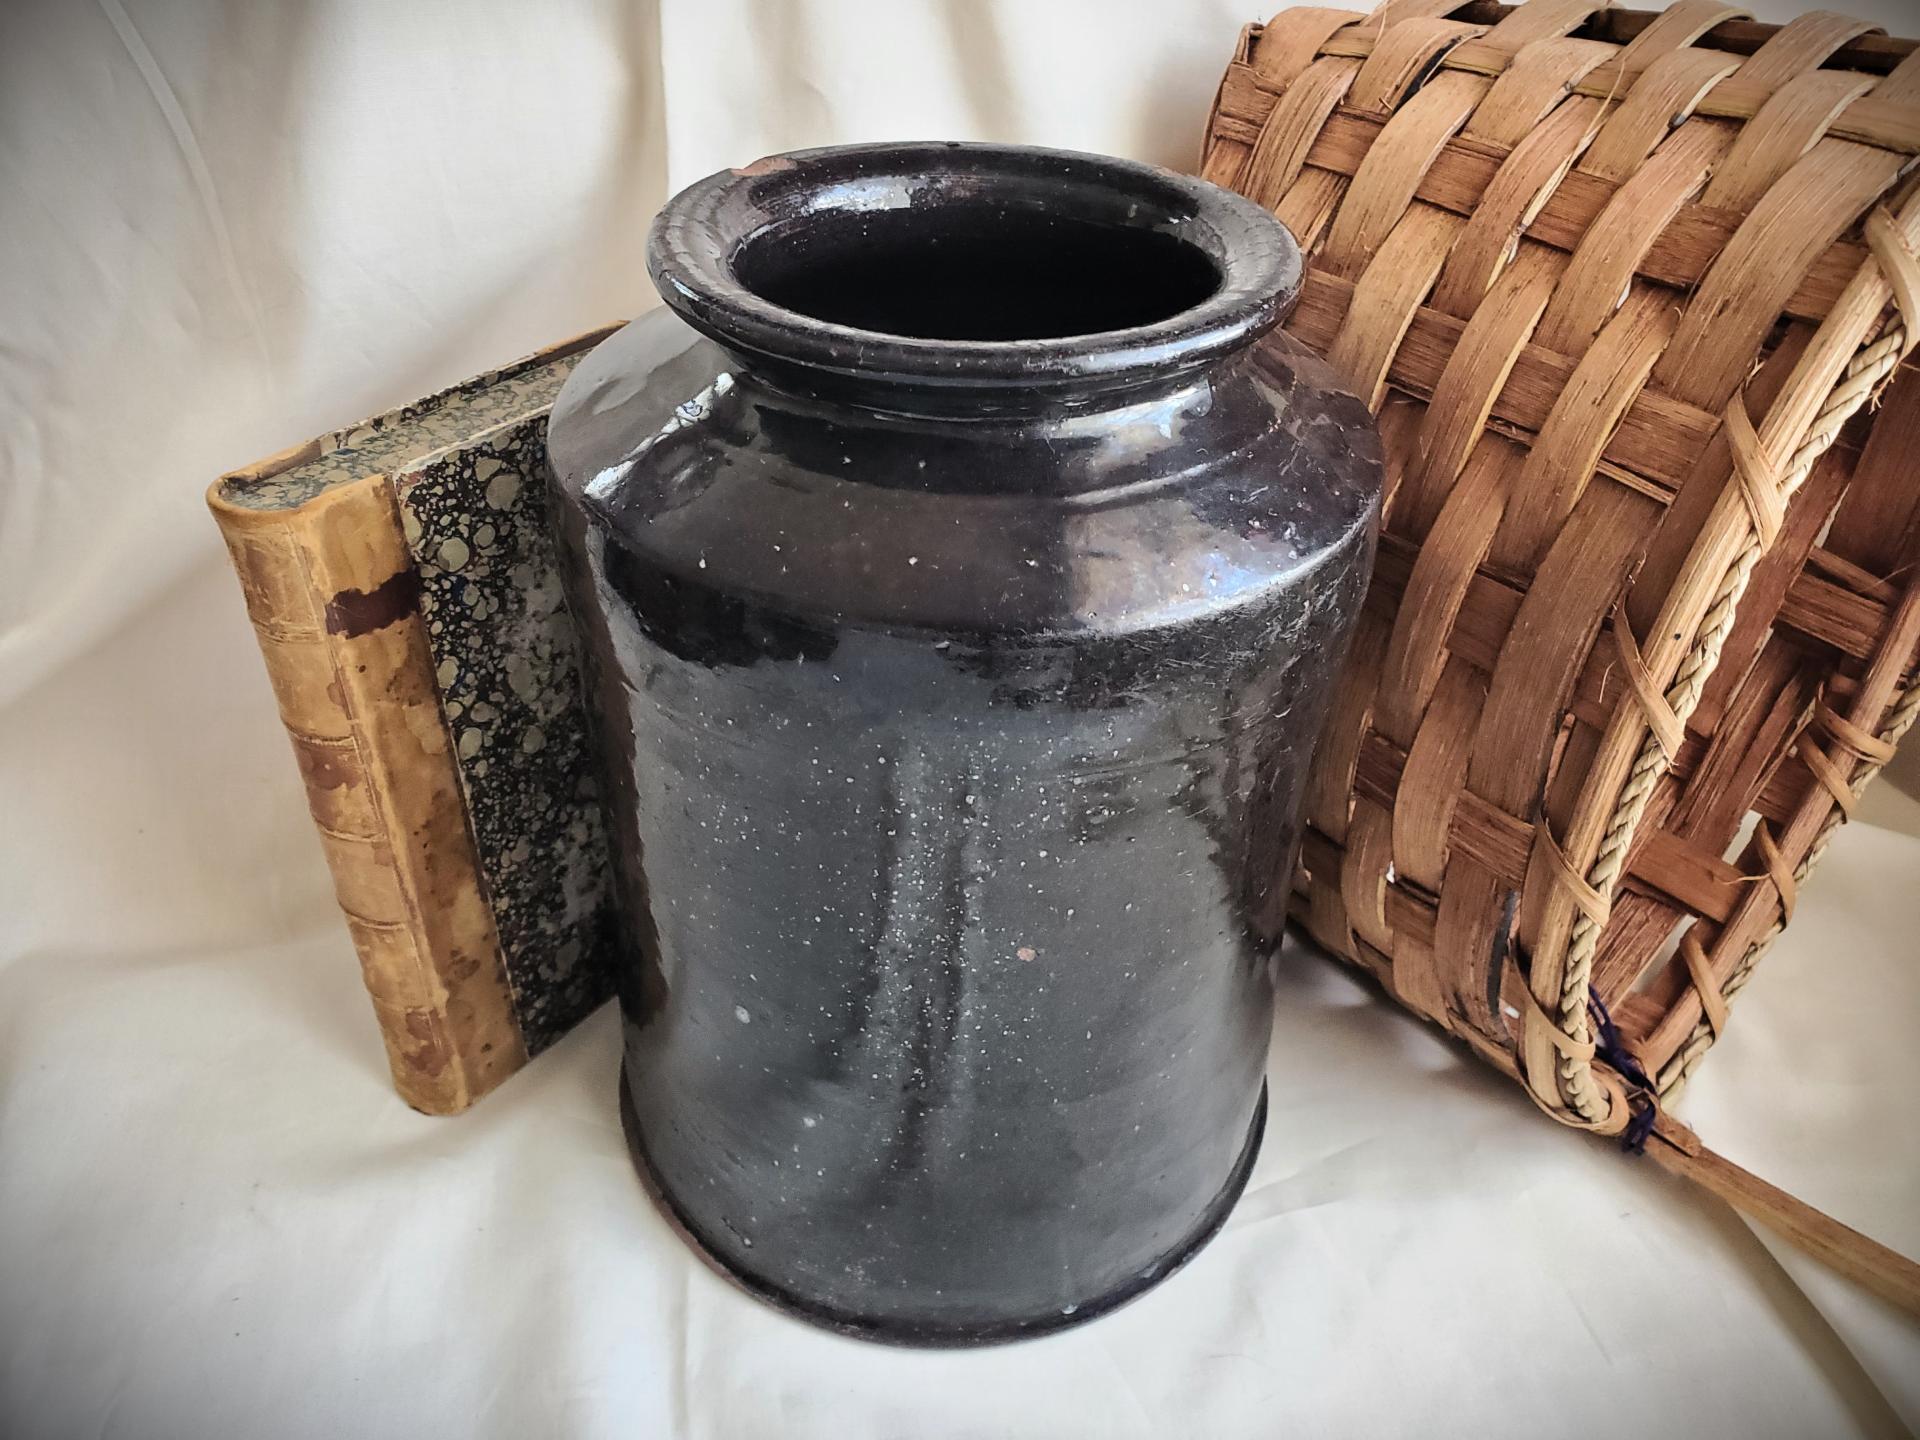 Antique 1800s Large Redware Canning, 19th Century Storage Jar with Black Glaze